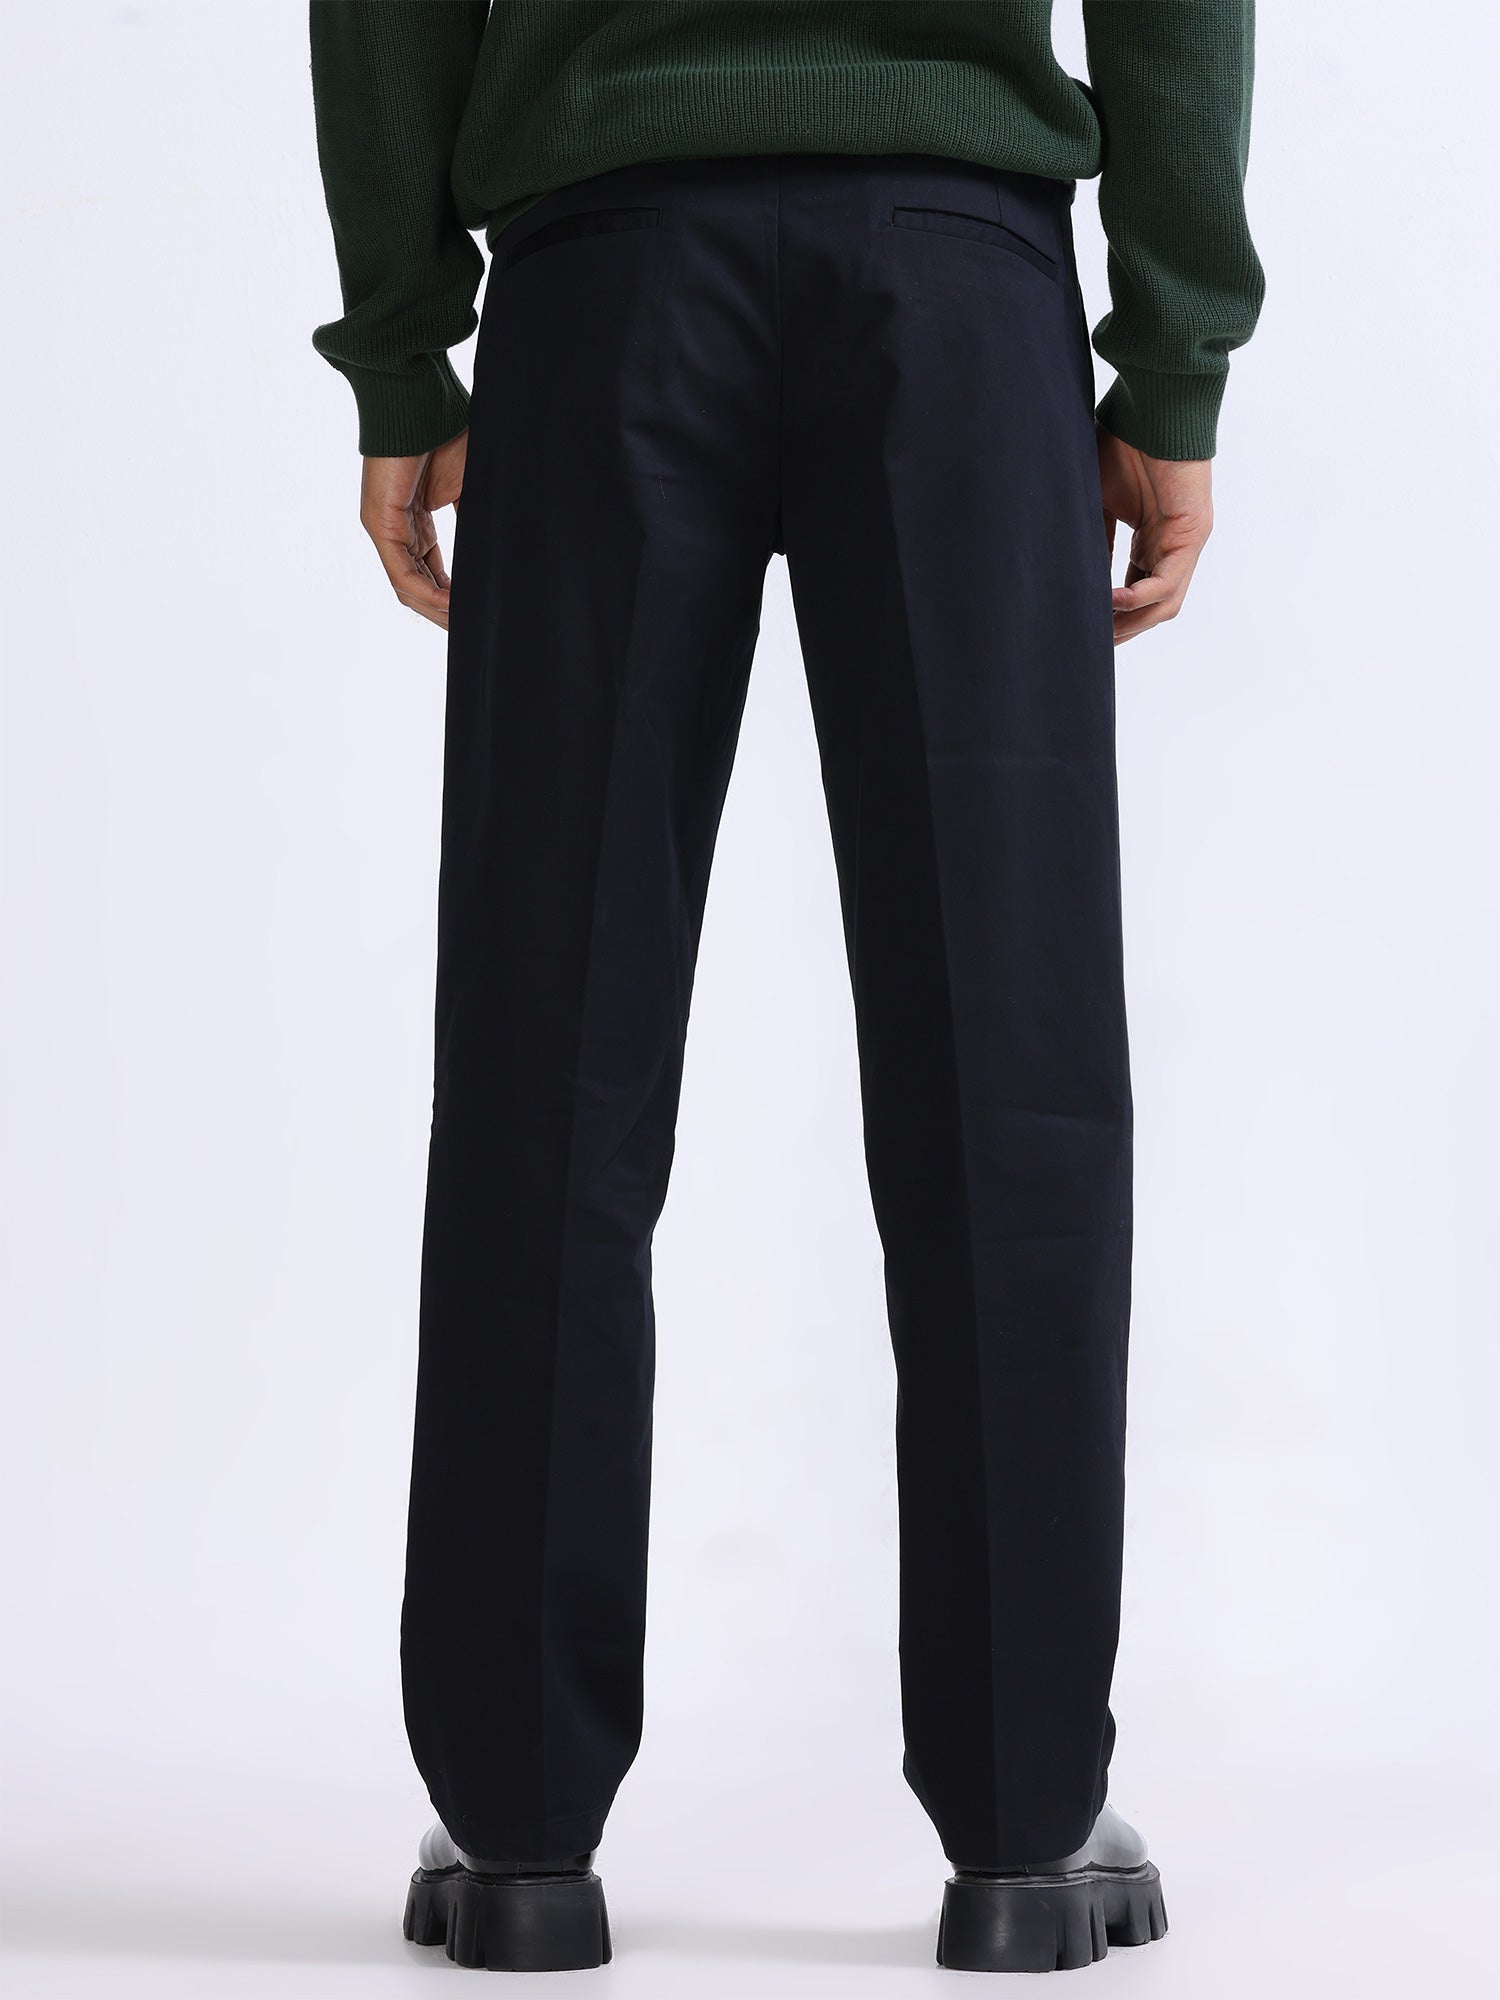 Buy Men's Regular Fit Formal Trouser Online at Best Prices in India -  JioMart.